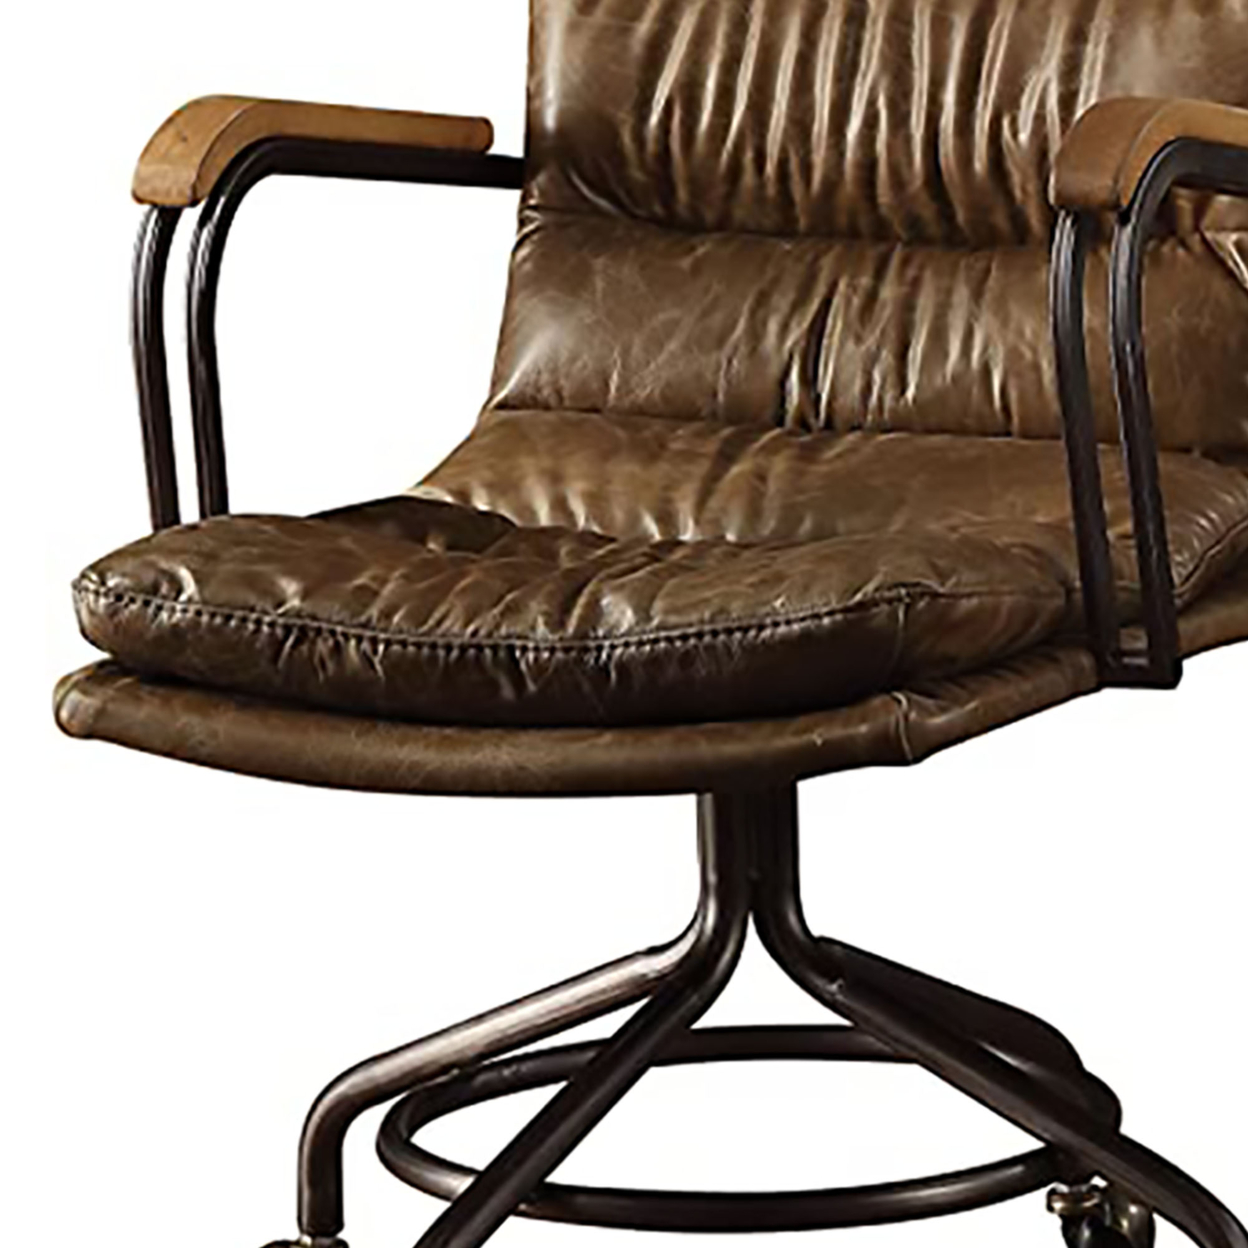 Metal & Leather Executive Office Chair, Vintage Whiskey Brown- Saltoro Sherpi